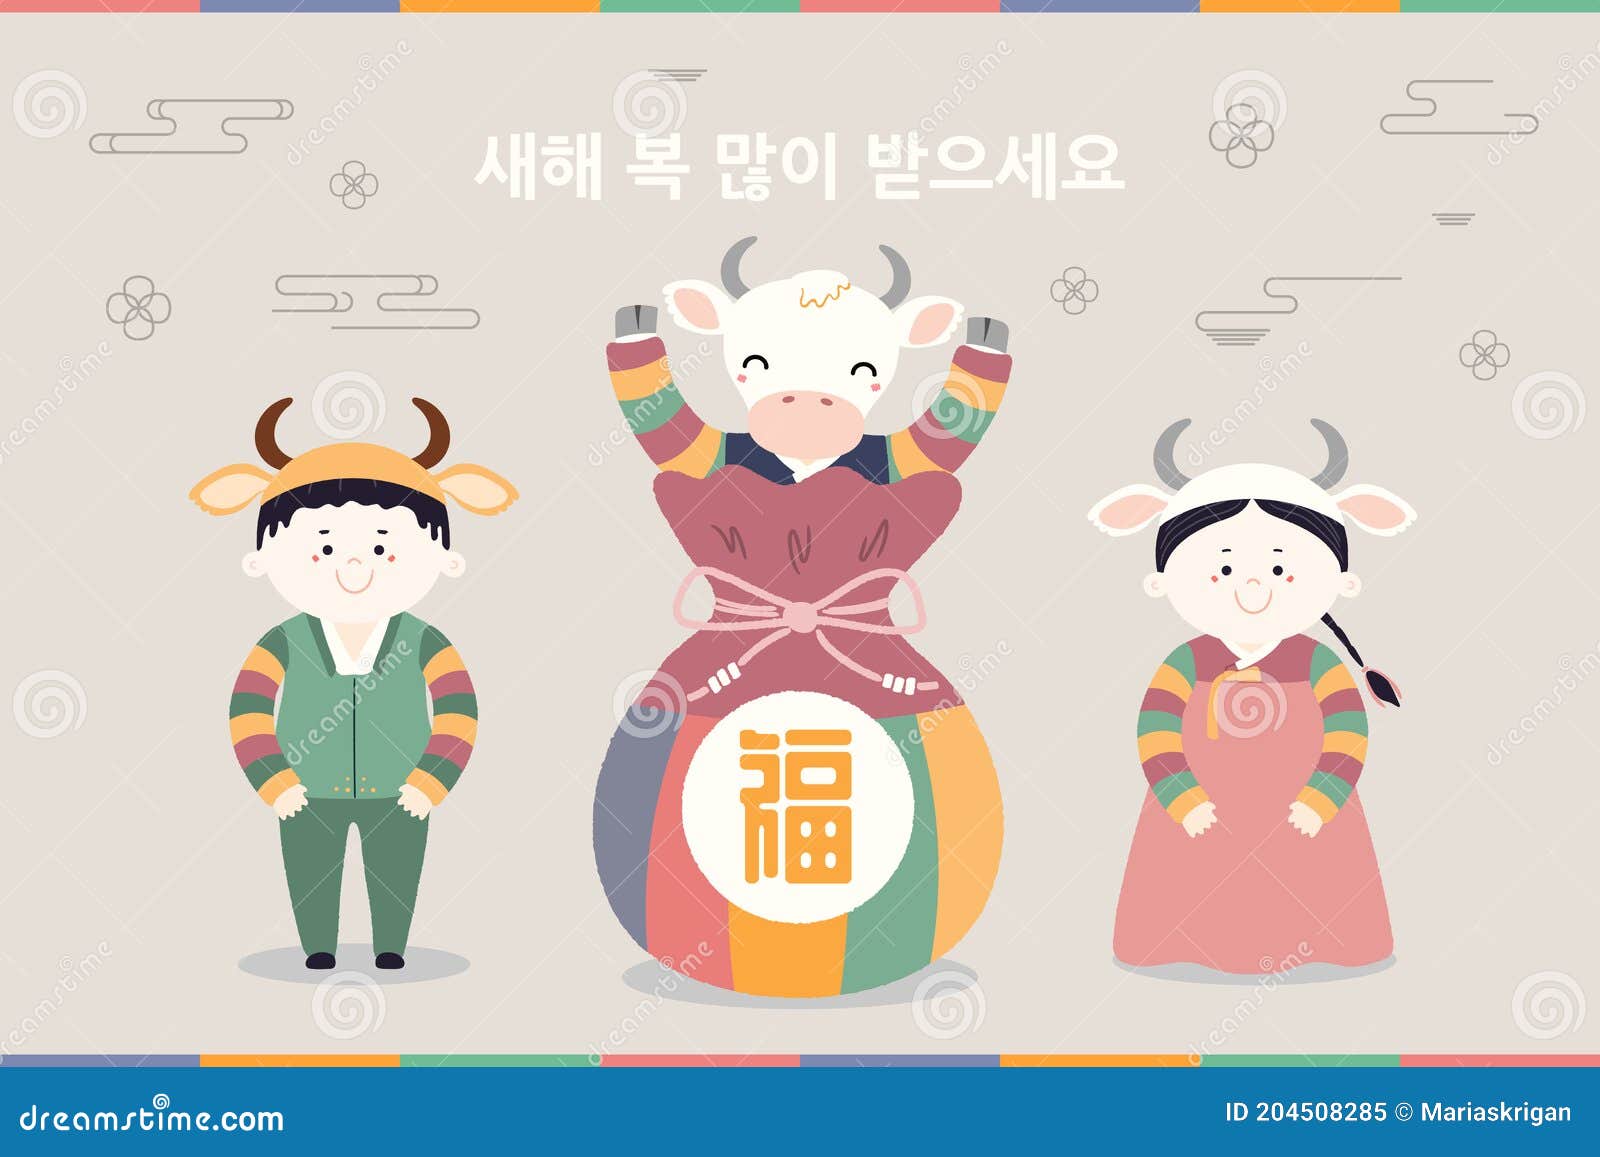 Korean New Year Greetings In English